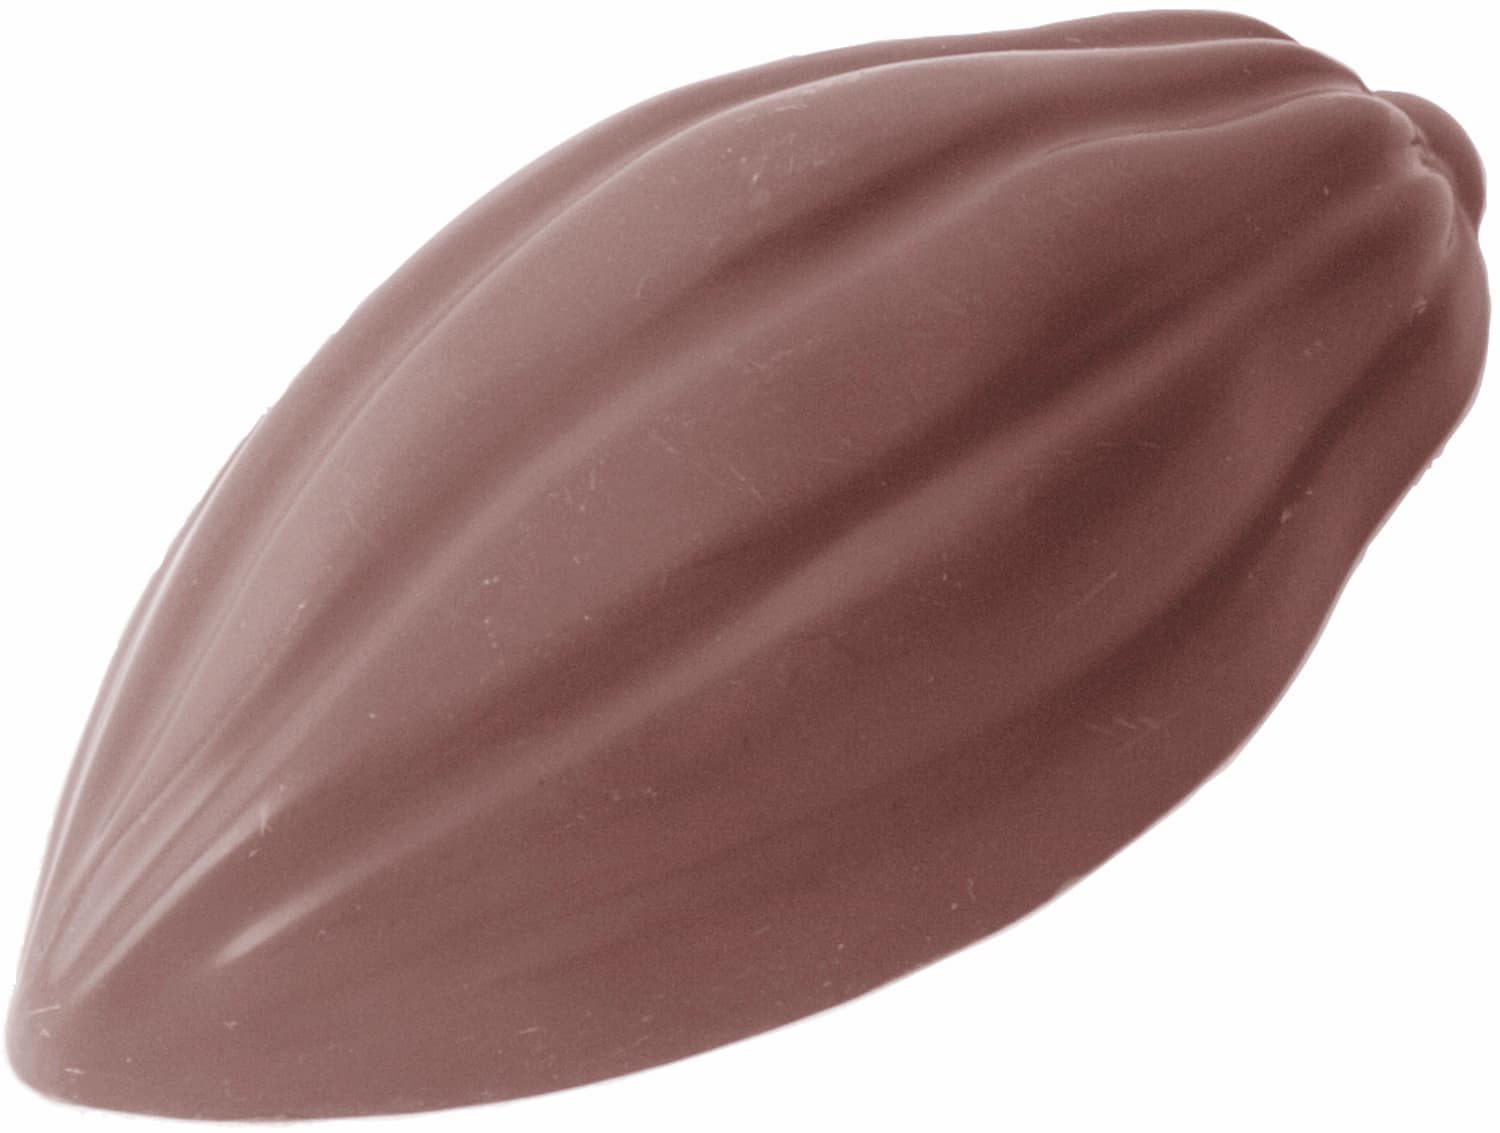 Chocolate mould "Cocoa bean" 421558